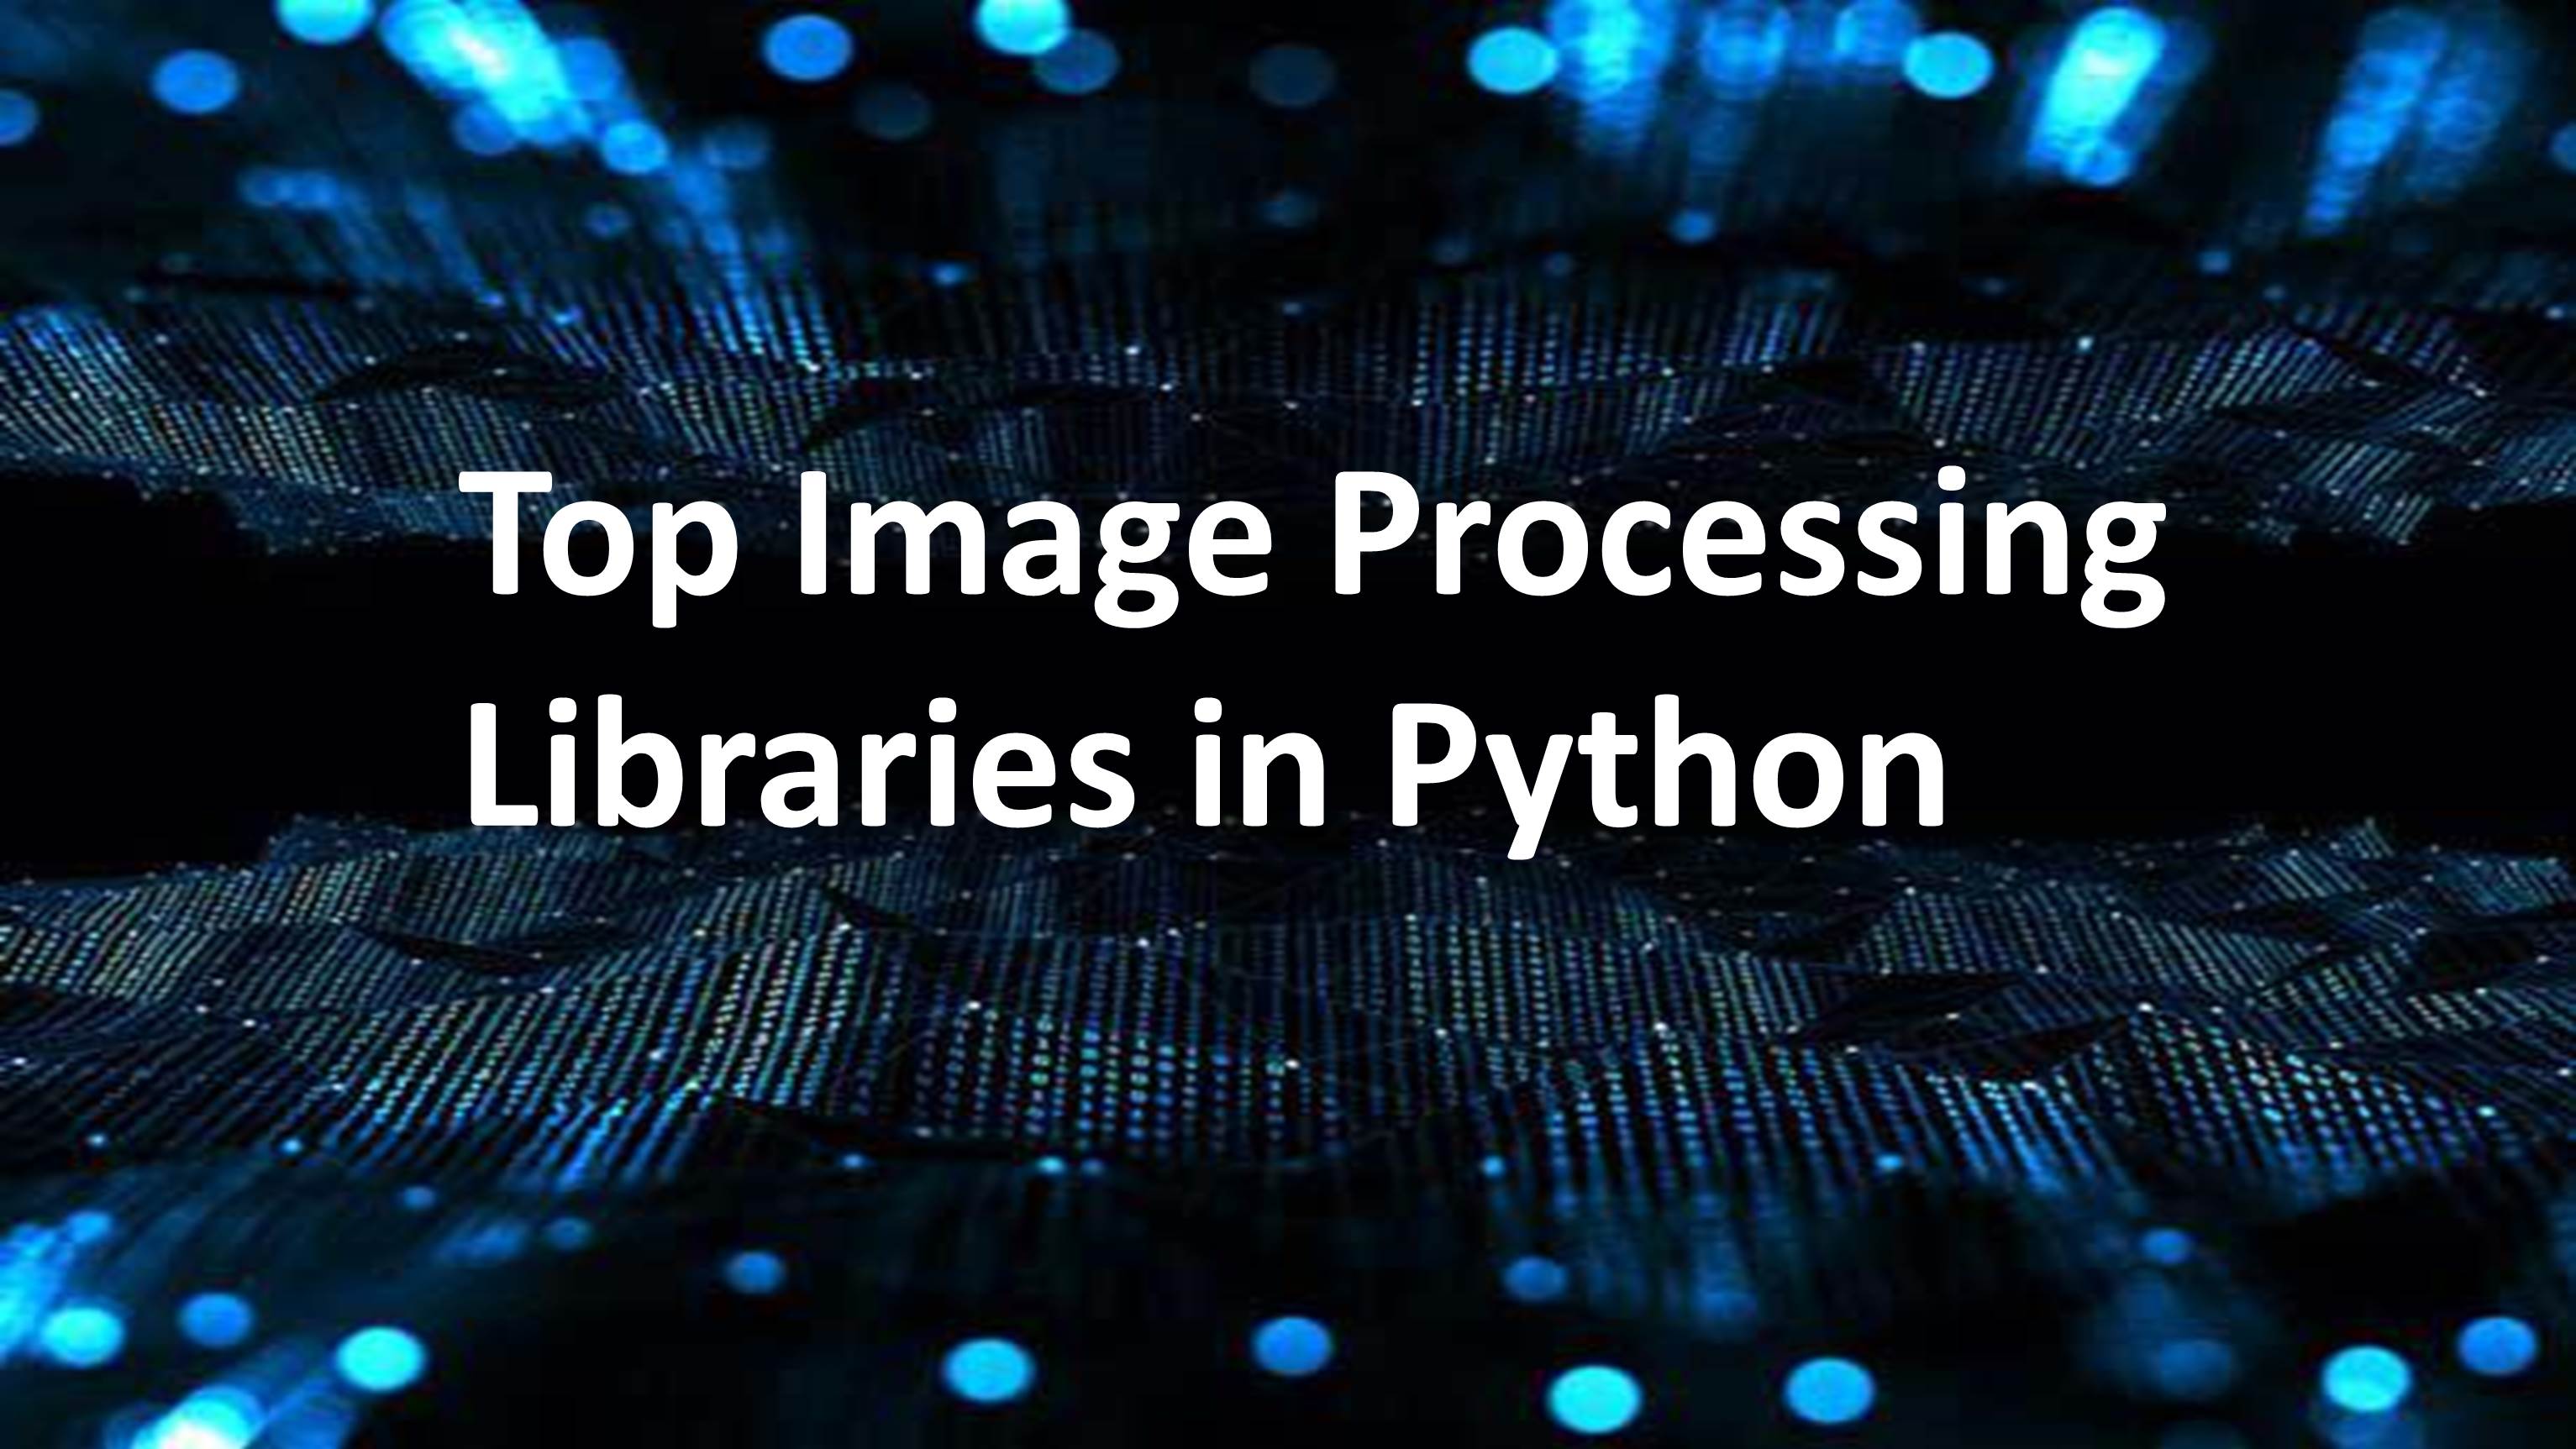 python libraries image processing image